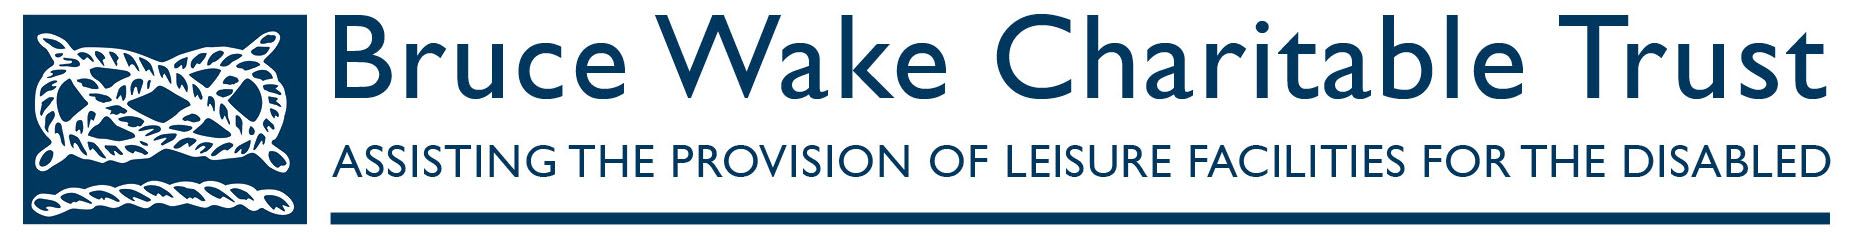 Bruce Wake Charitable Trust logo